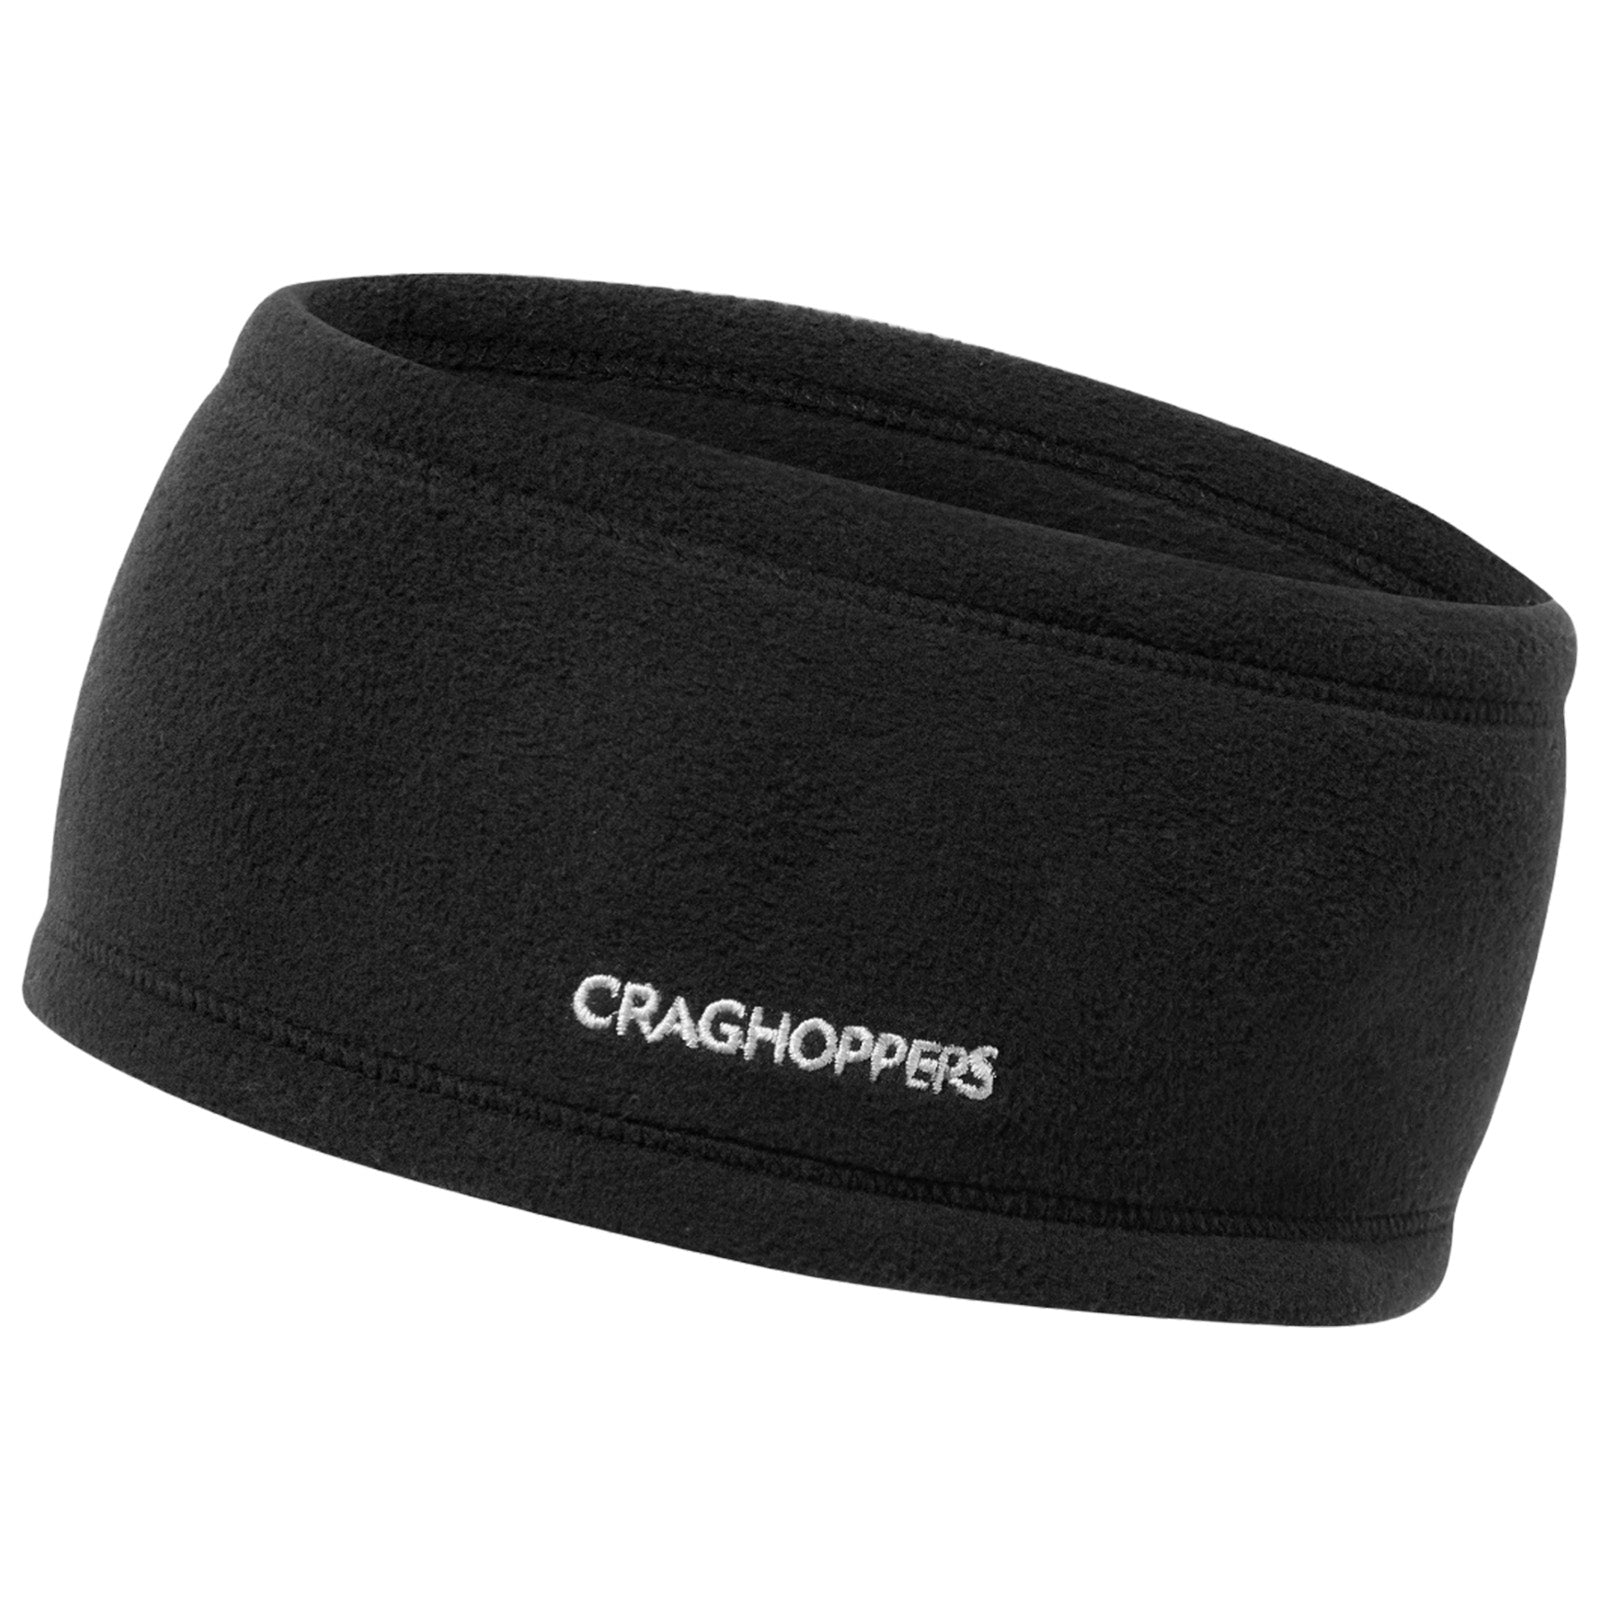 Craghoppers Unisex Sindon Headband